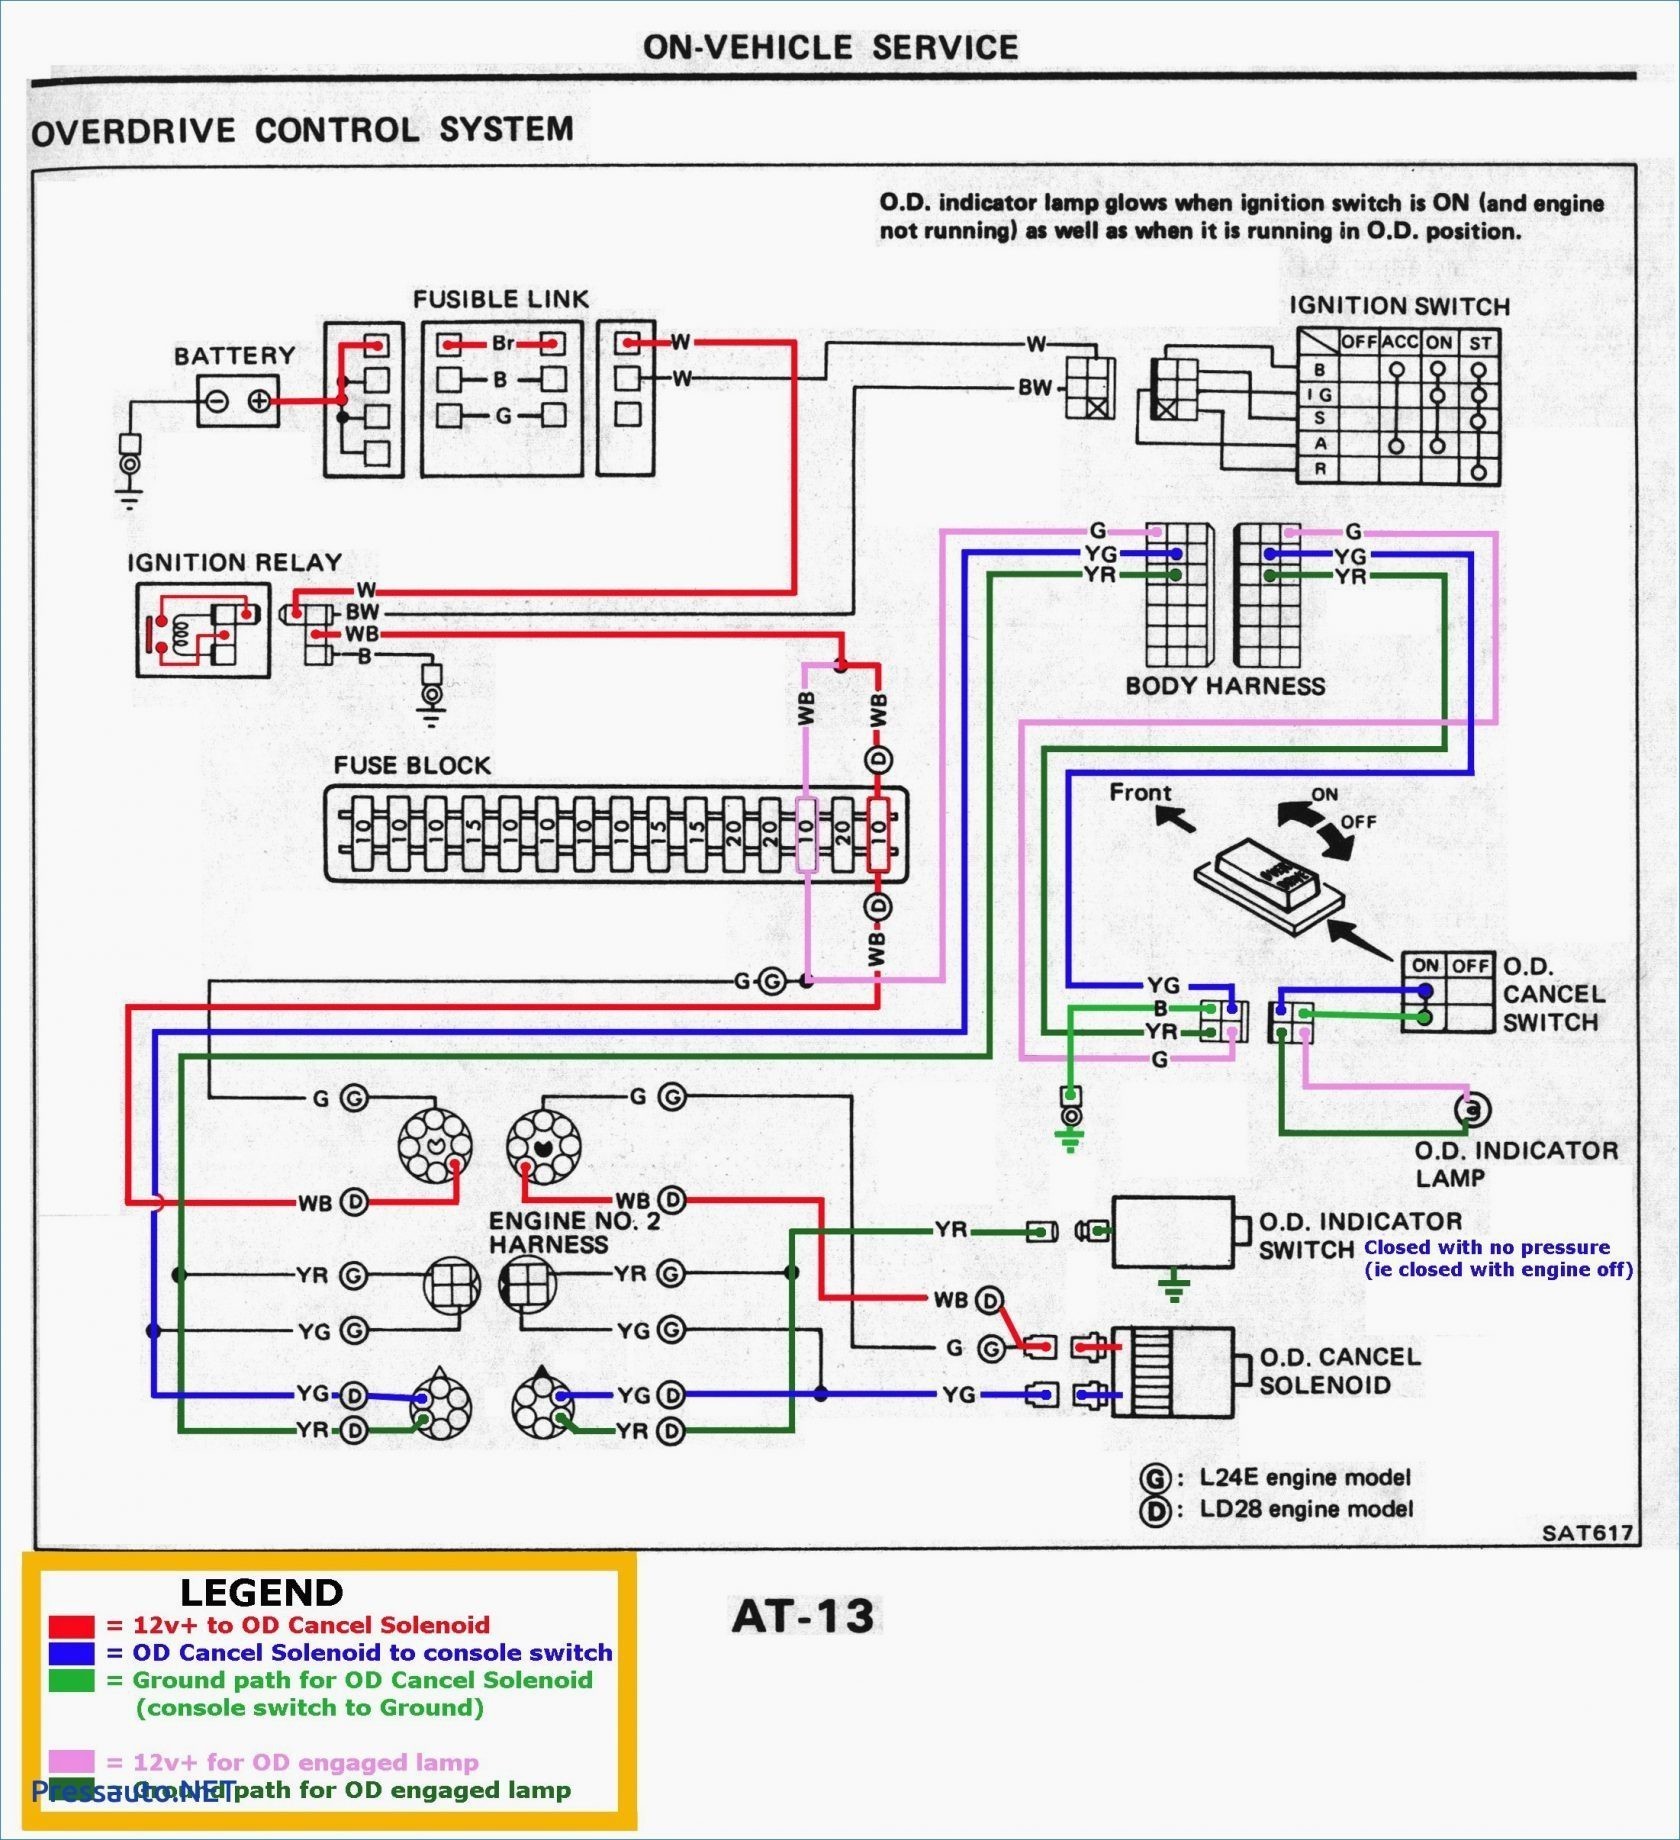 Wiring Diagram for Kib Mv22vwl Kib Systems Monitor Panel Schematic Best Of Wiring Diagram for Kib Mv22vwl